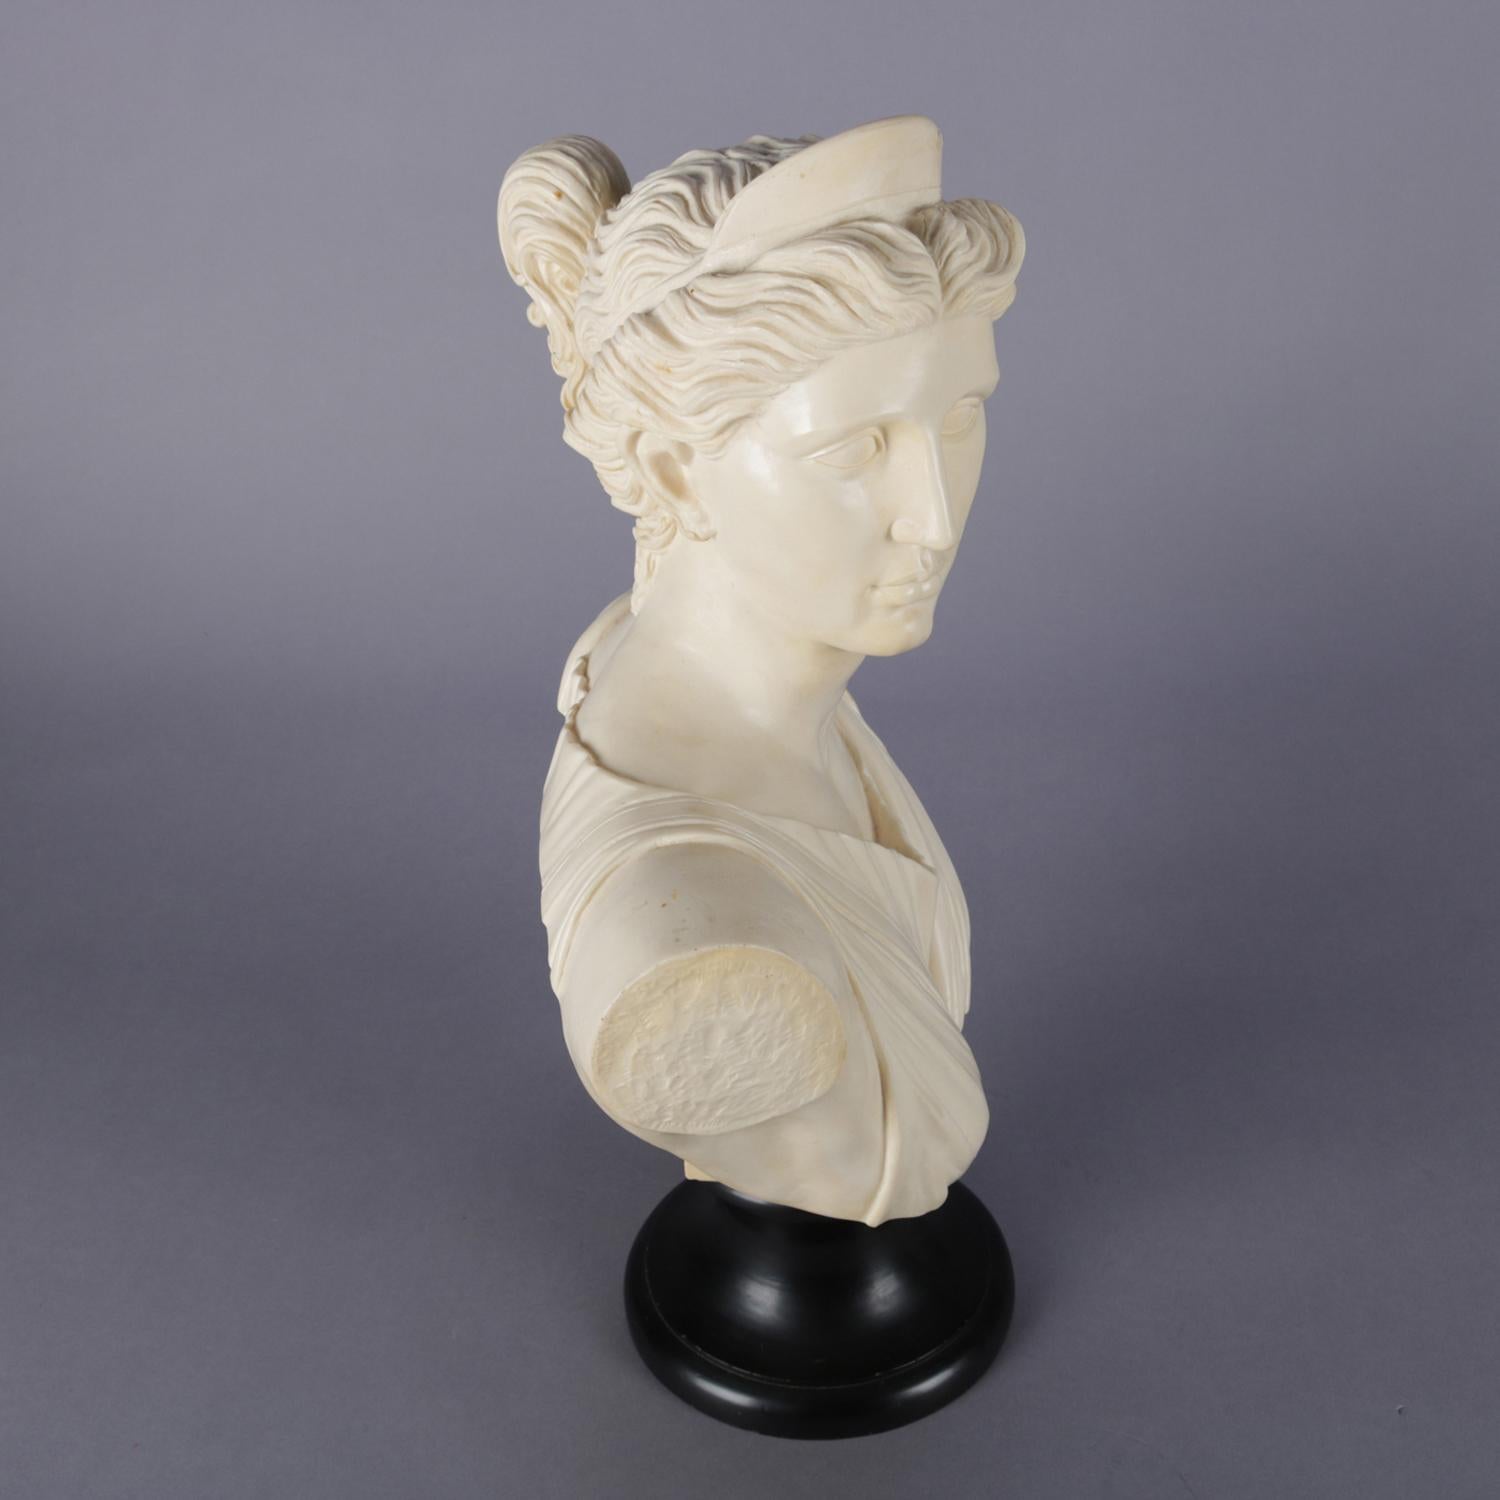 Molded Italian Portrait Sculpture of Classical Artemis Signed A. Santini, Resin